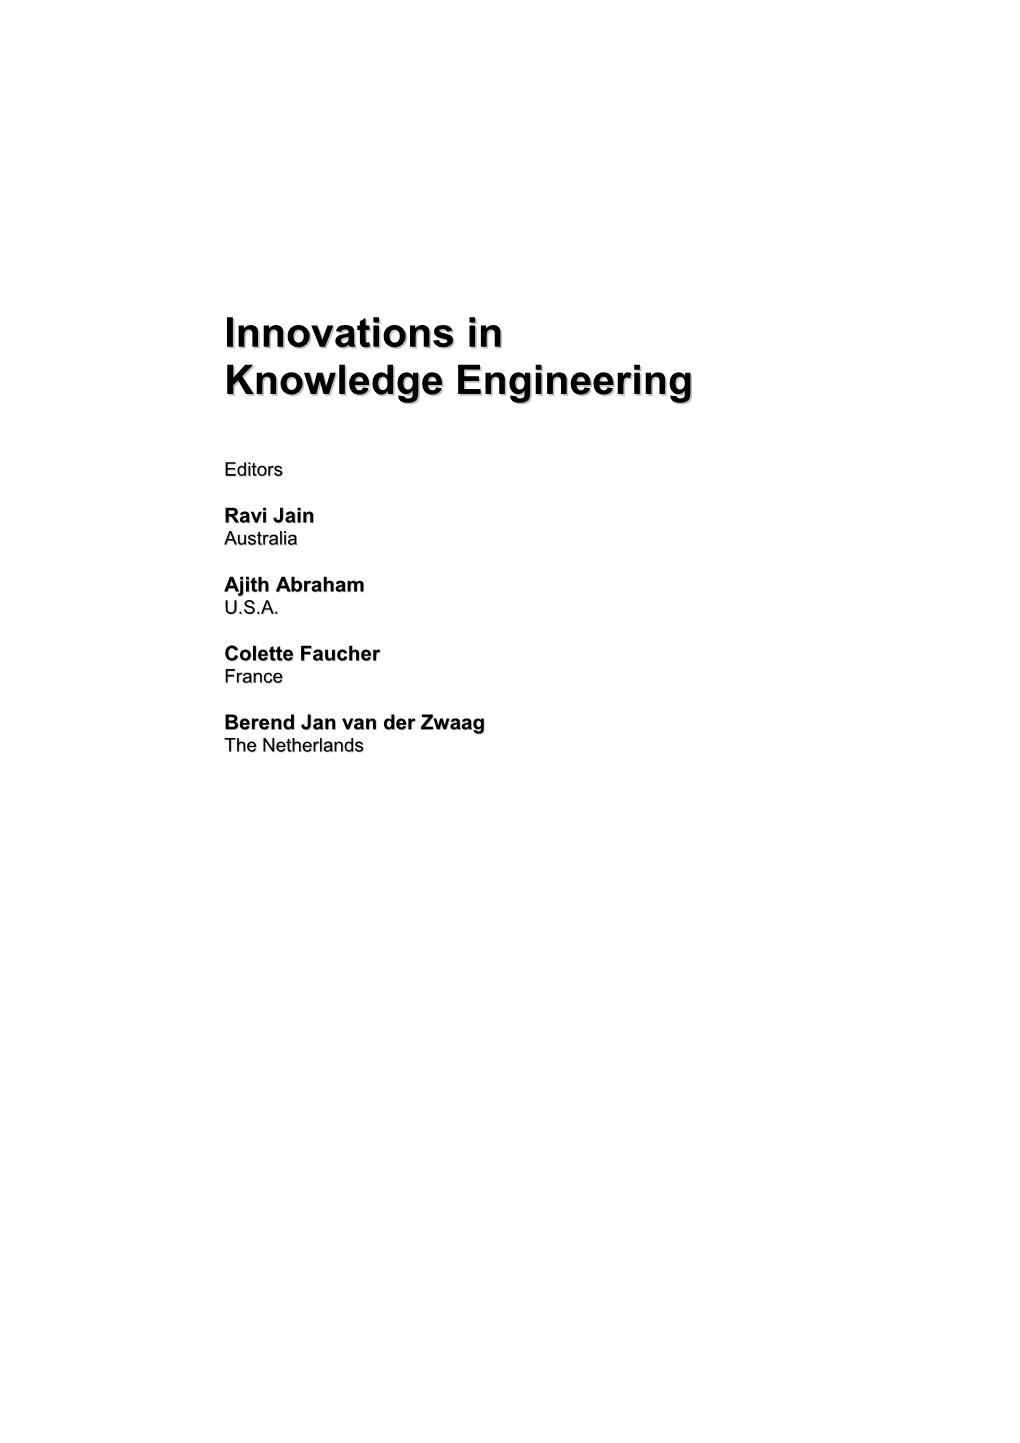 Innovations in Knowledge Engineering